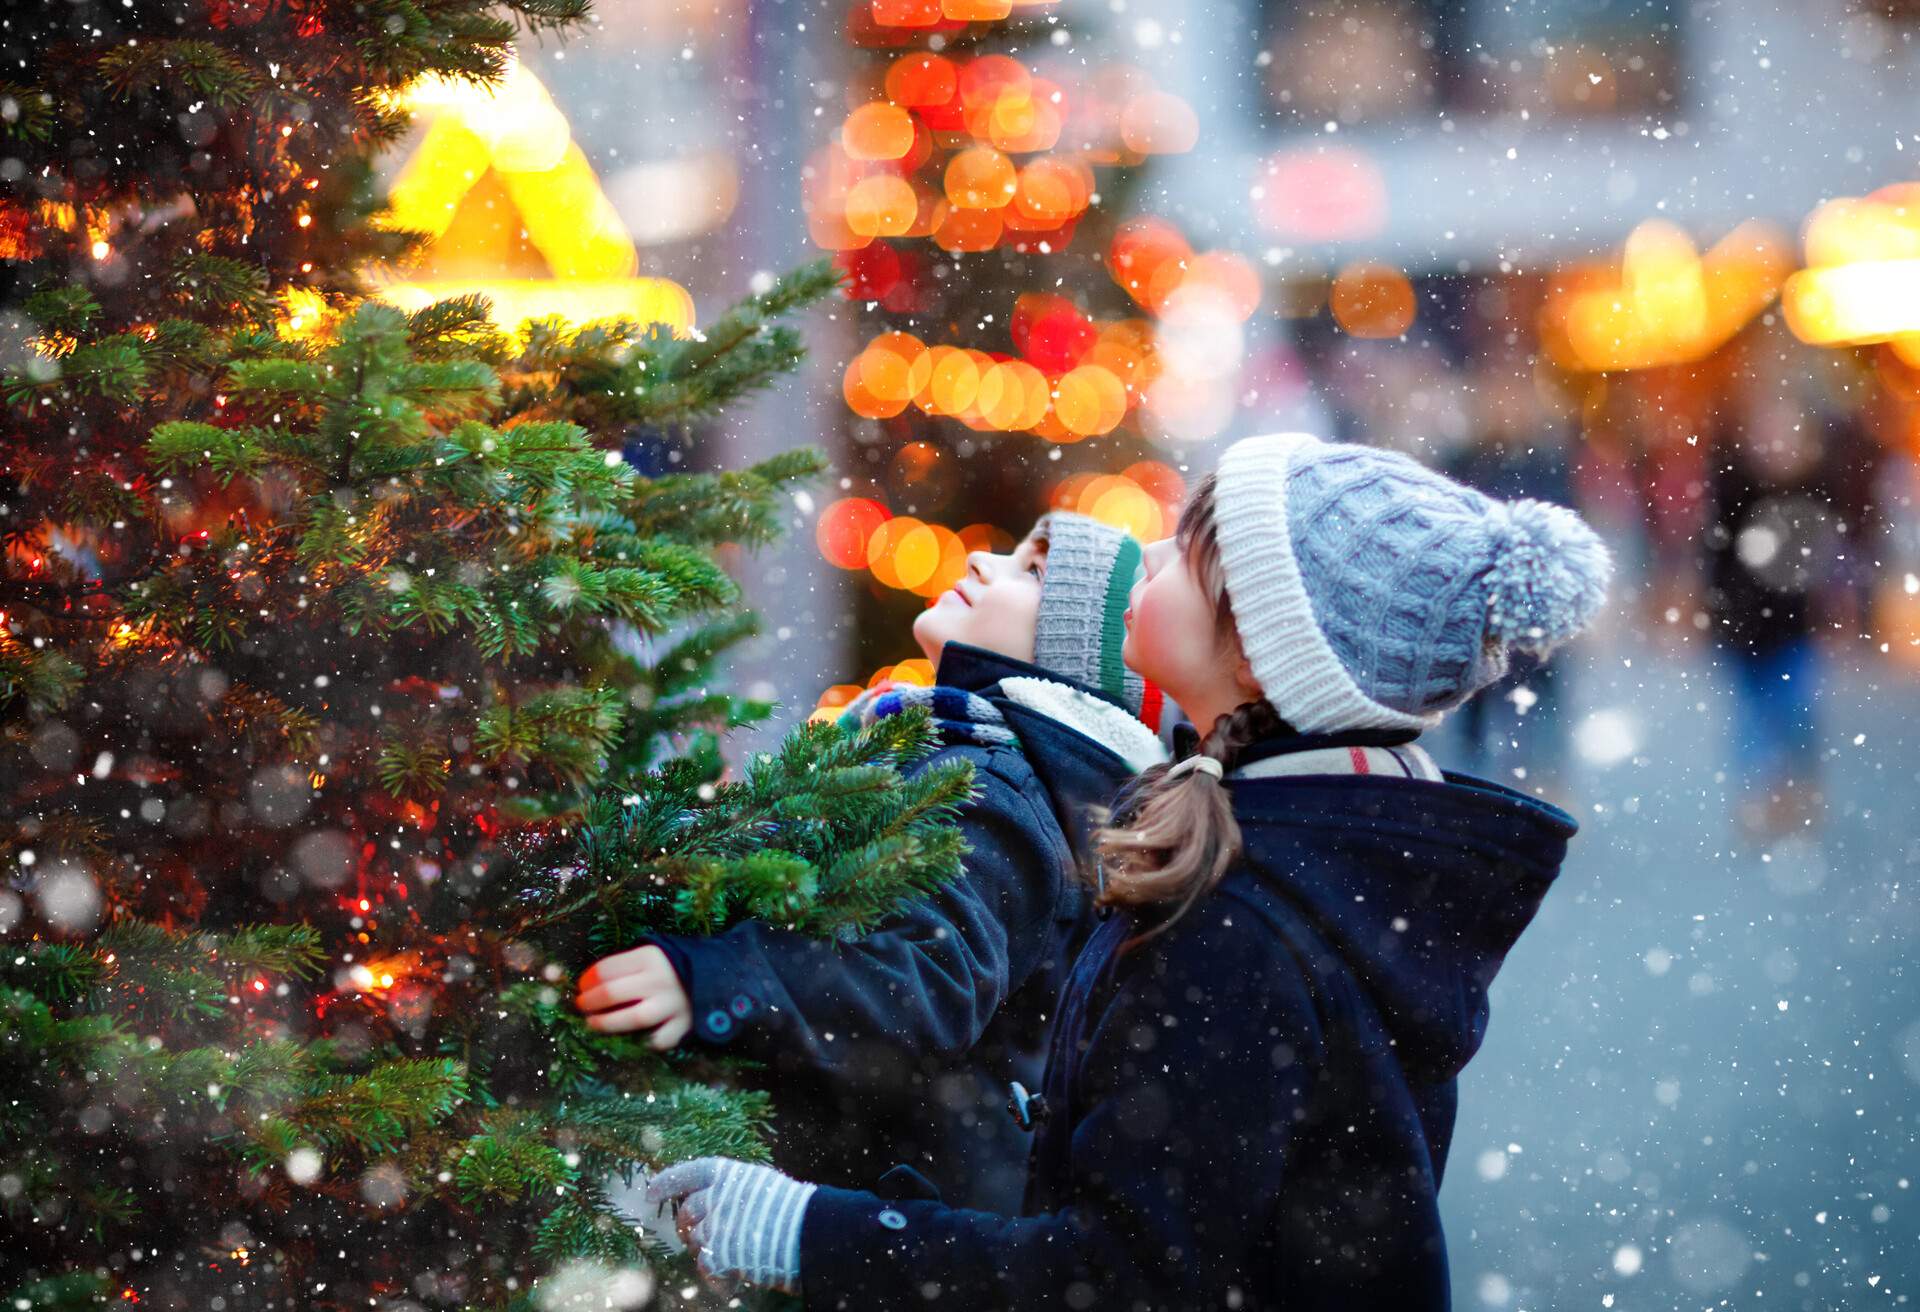 15 Christmas holiday destinations to feel truly festive | KAYAK